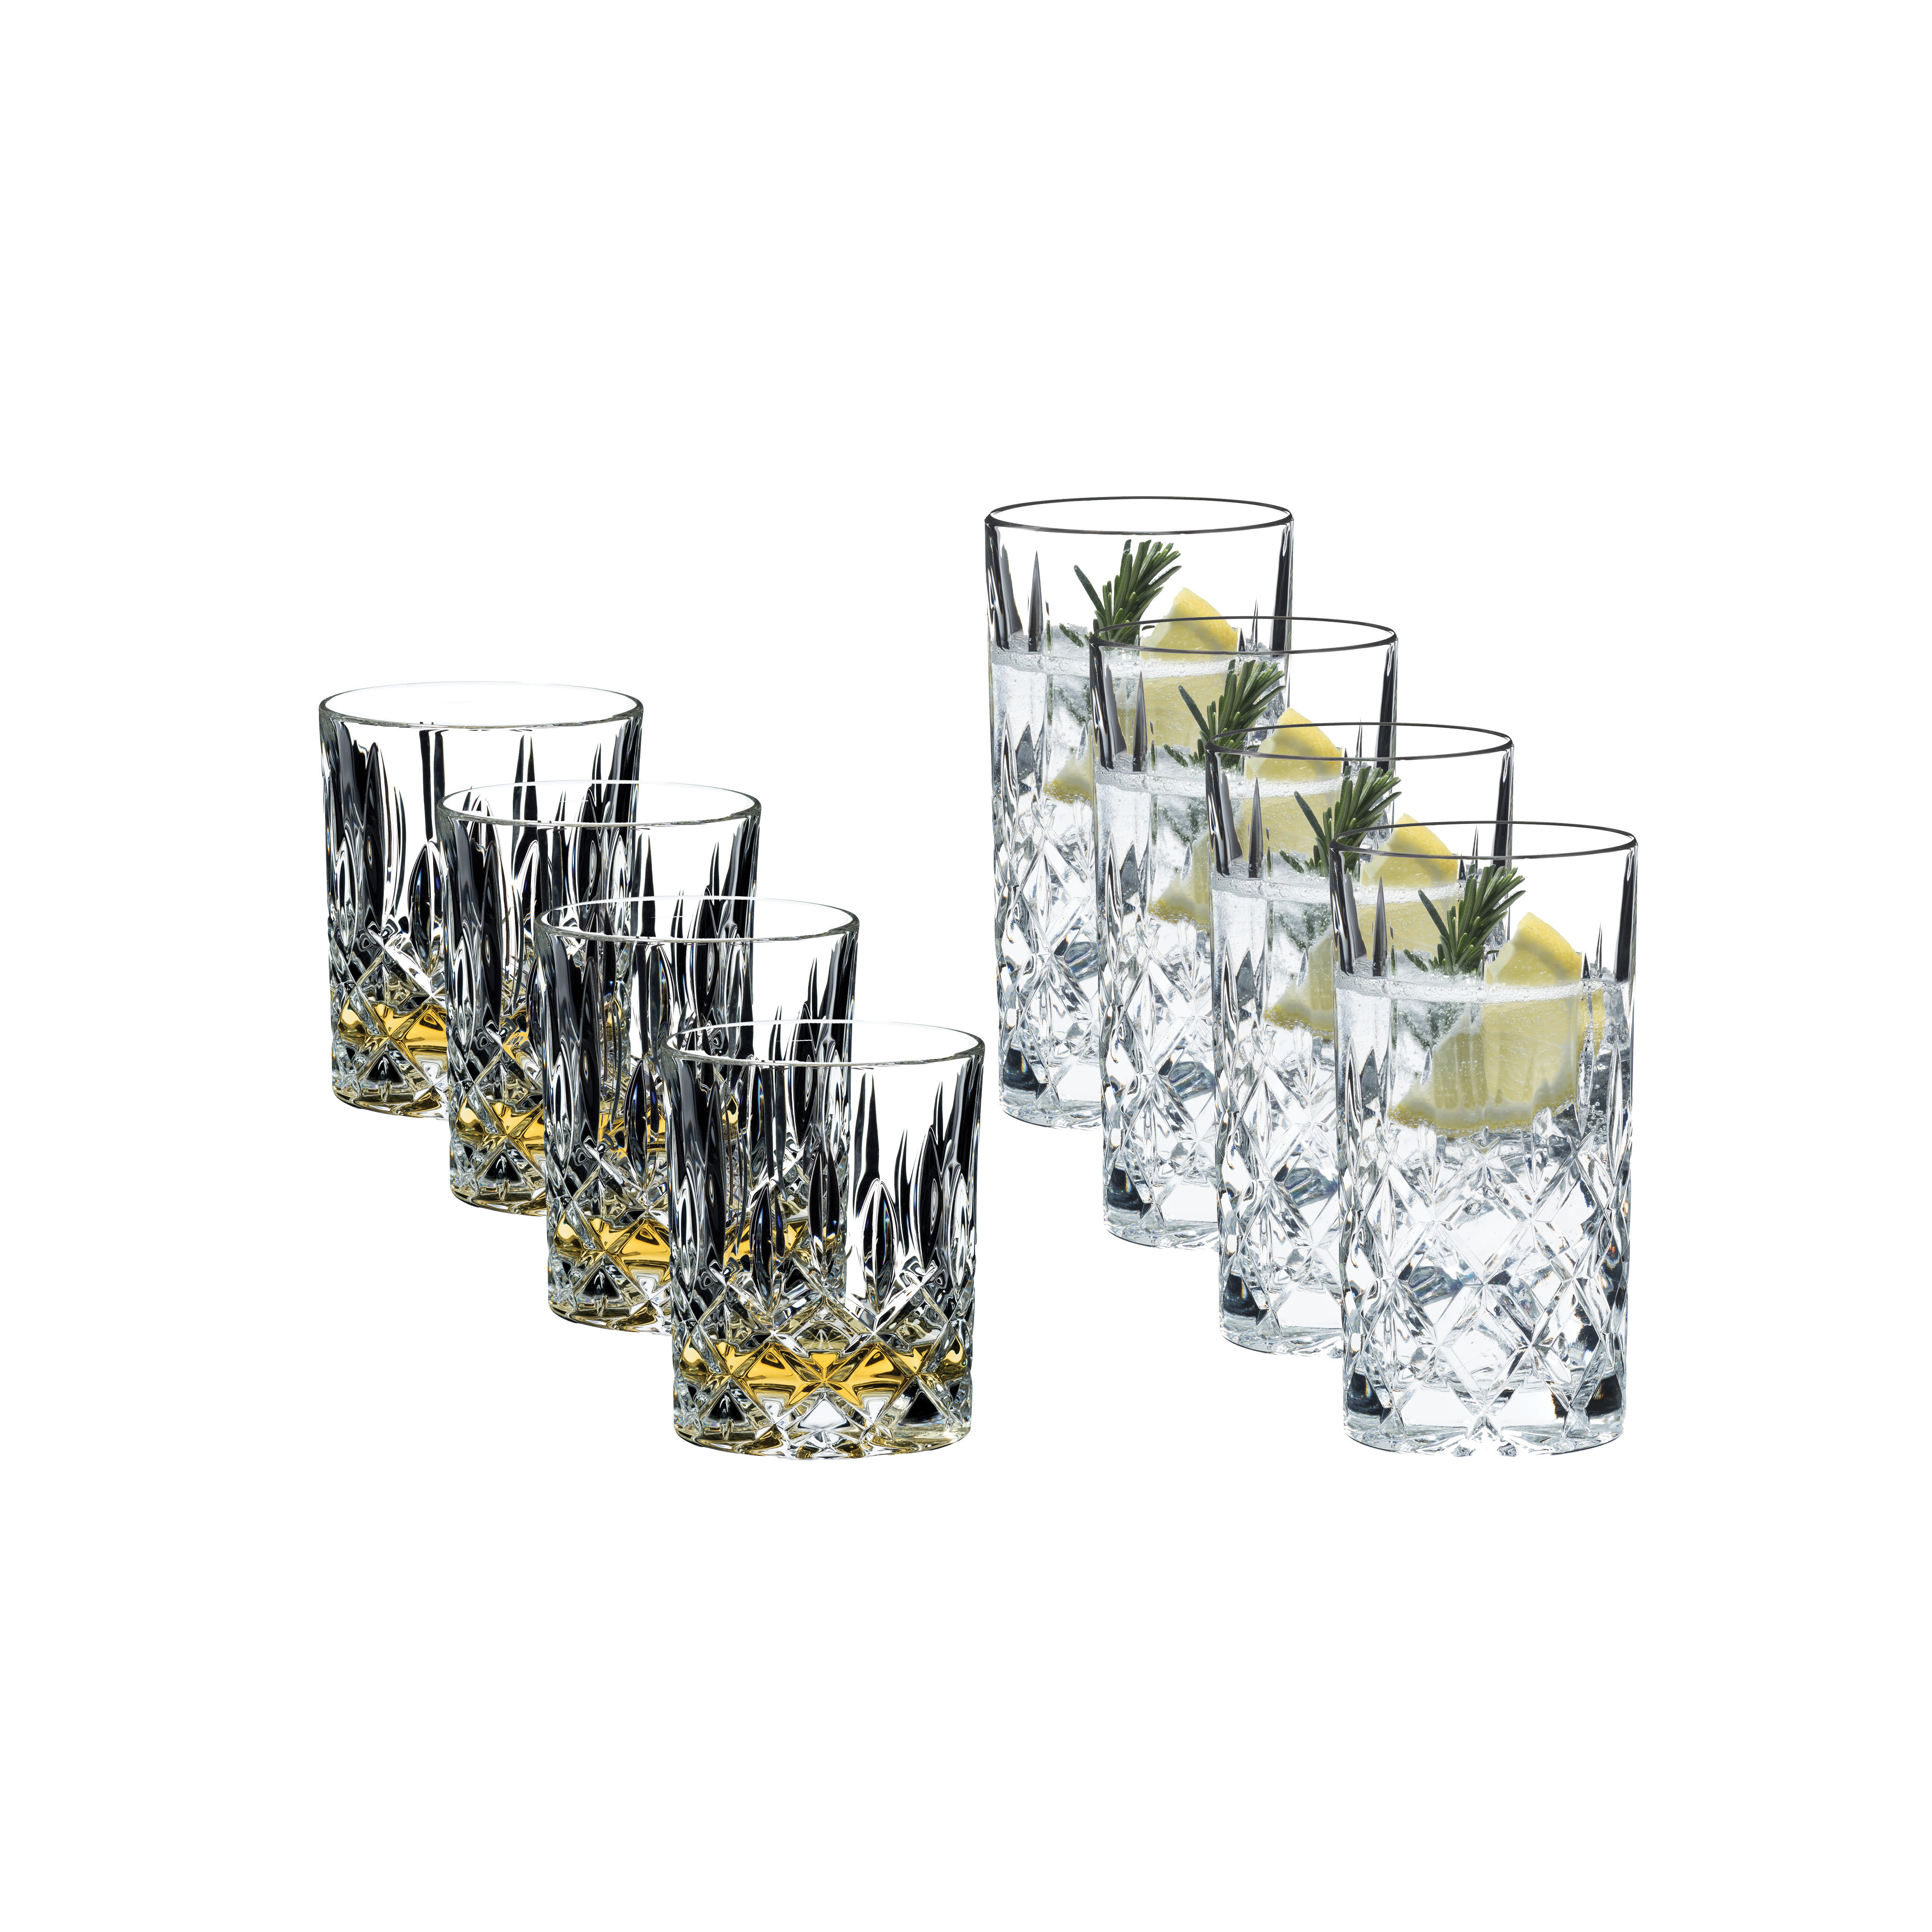 Riedel Drink Specific Glassware 13 oz. Double Rocks Glass - Set of